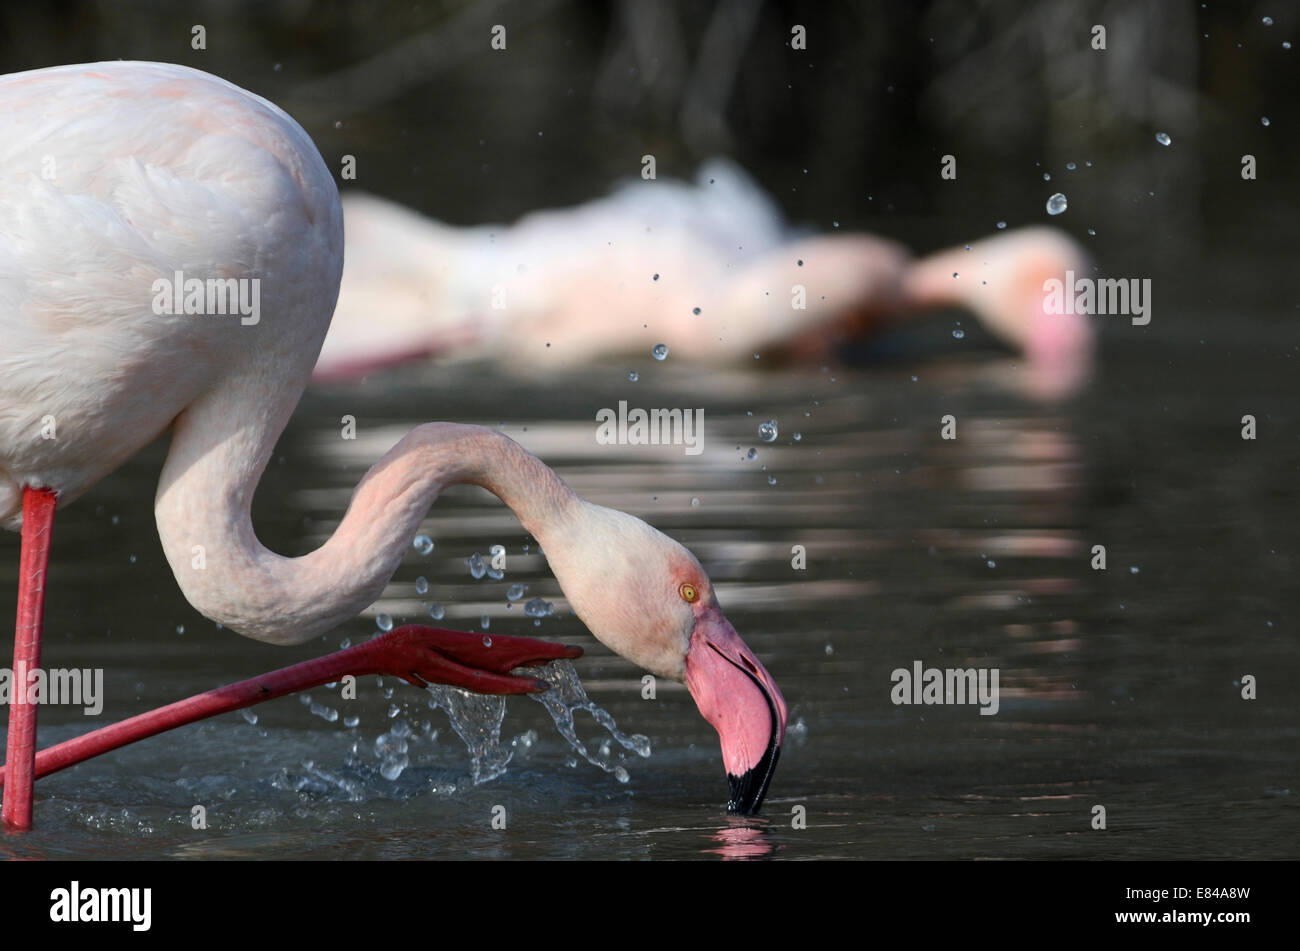 Greater Flamingo Phoenicopterus roseus  Camargue France Stock Photo